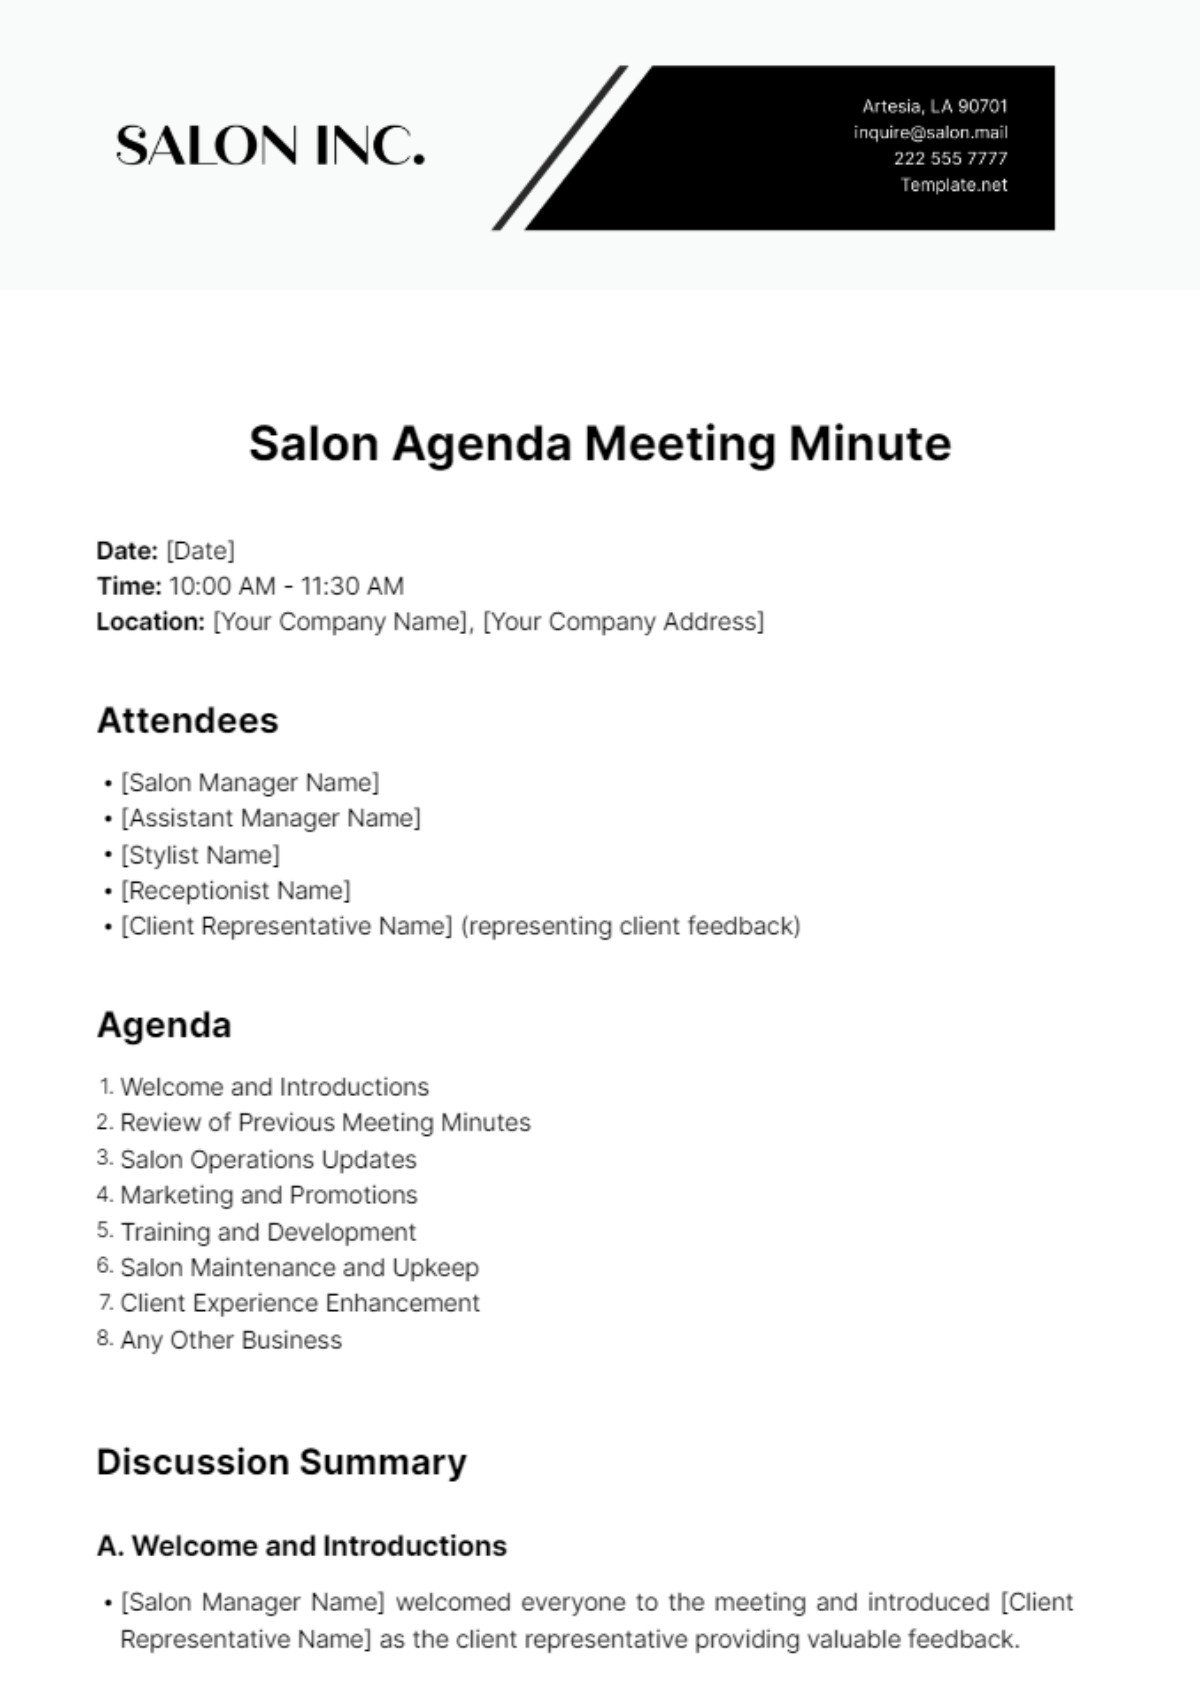 Free Salon Agenda Meeting Minute Template